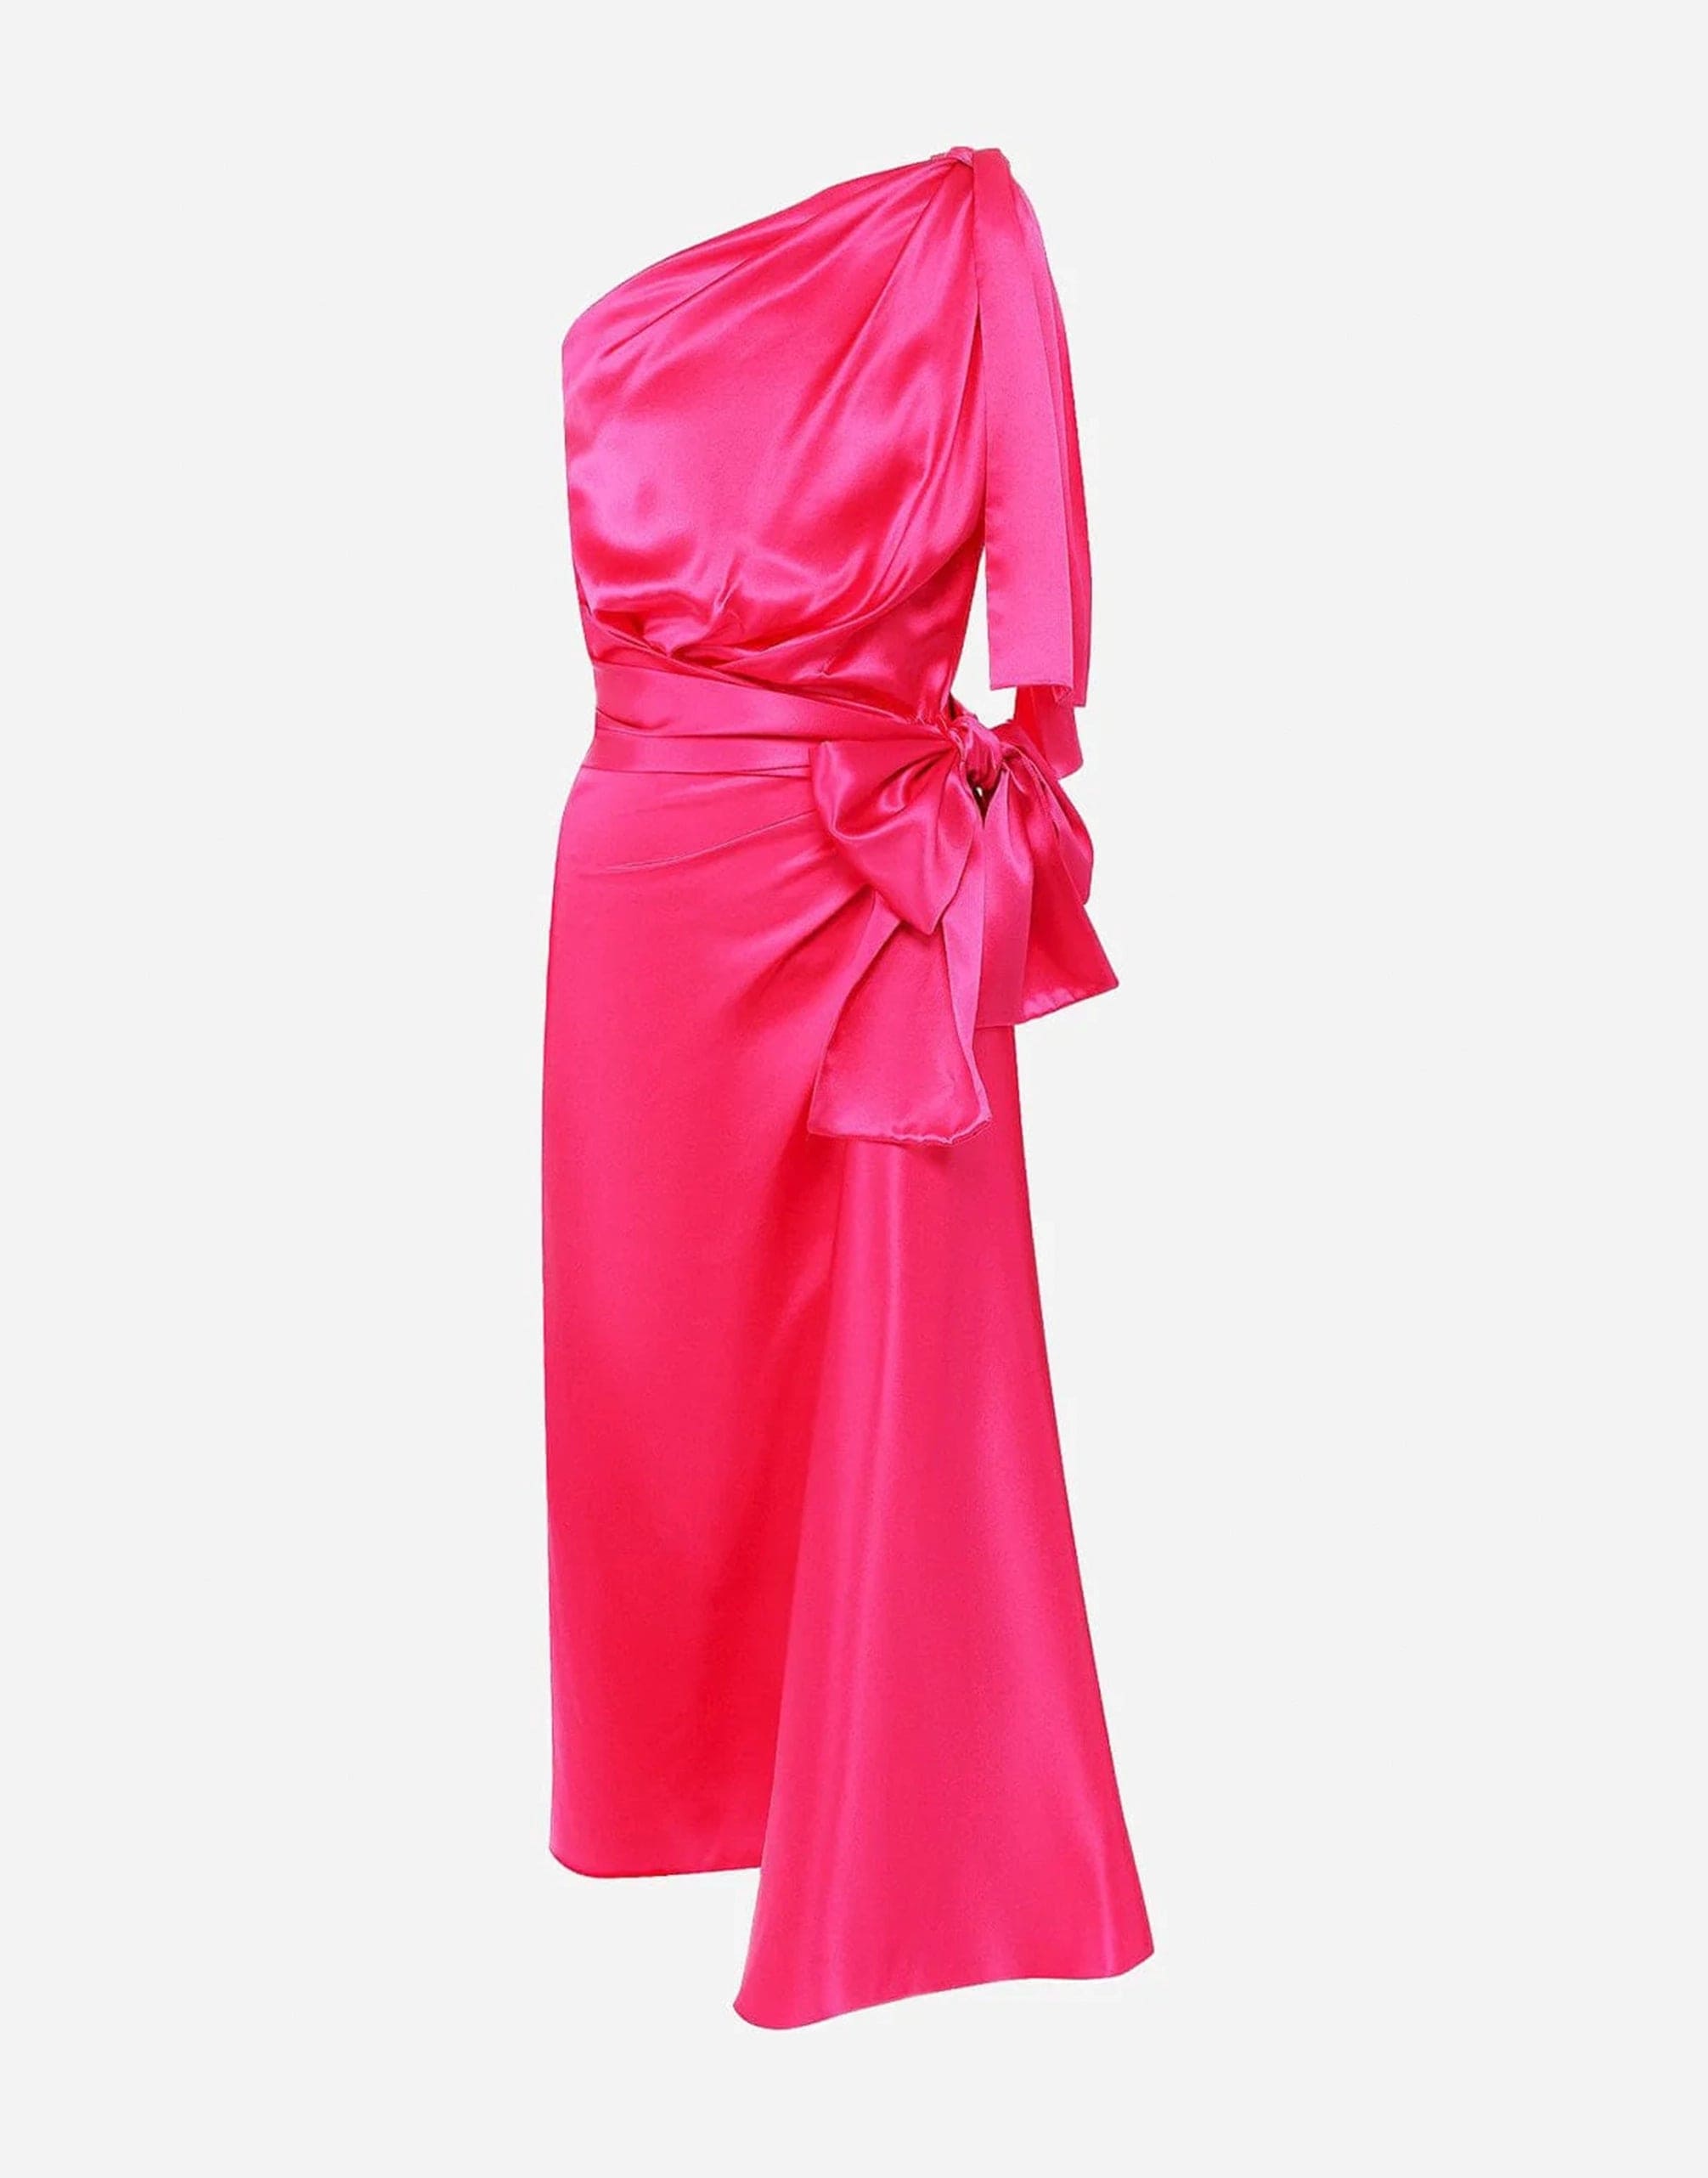 Silk-Taffeta One-Sleeve Ruched Cocktail Dress